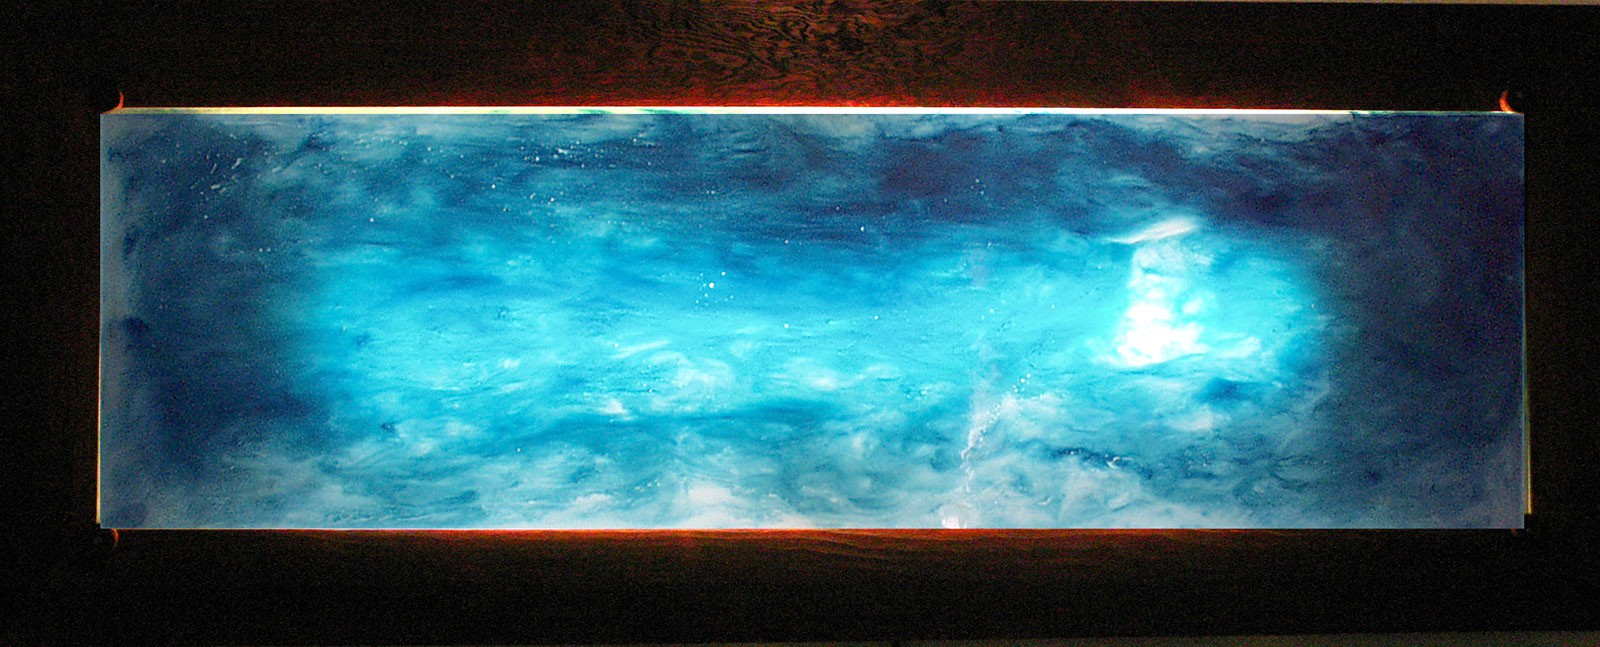 Ocean, 2005 14" x 50" - Liquid Plastic, Porcelainizer and Oil Paint Mixture on Glass. Back-Lit Glass Painting. SOLD